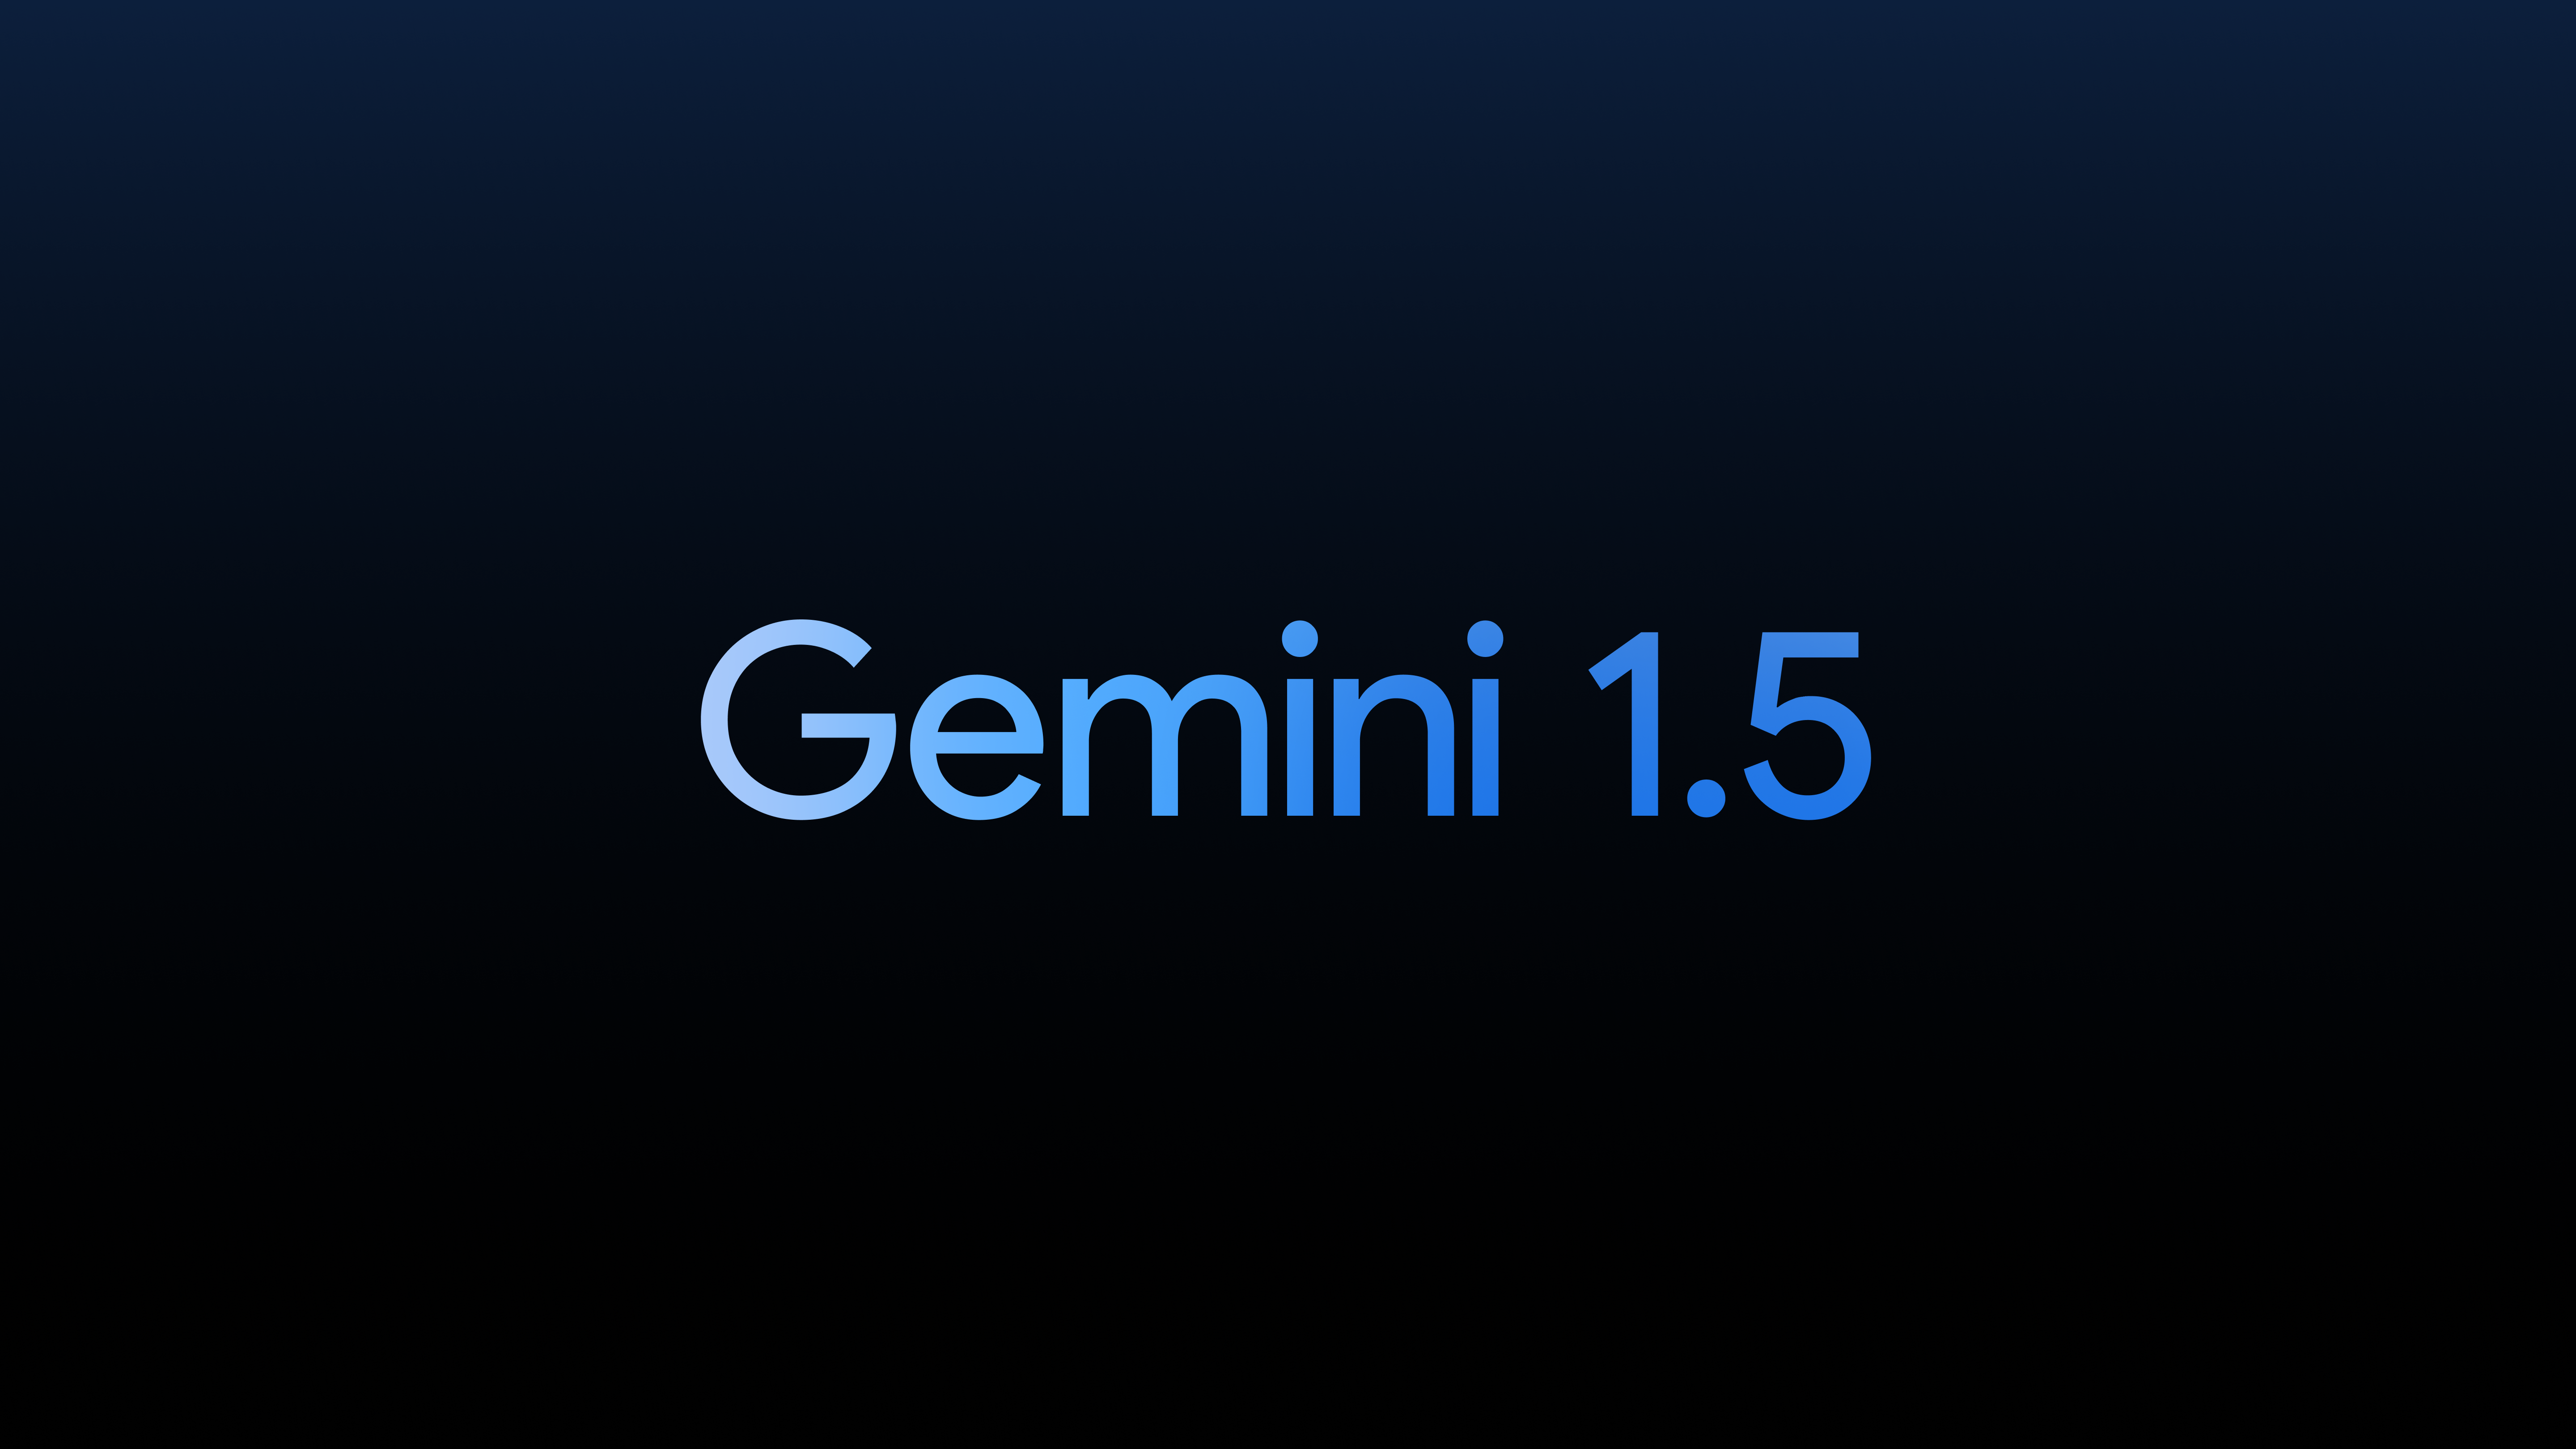 Our next-generation model: Gemini 1.5 Image